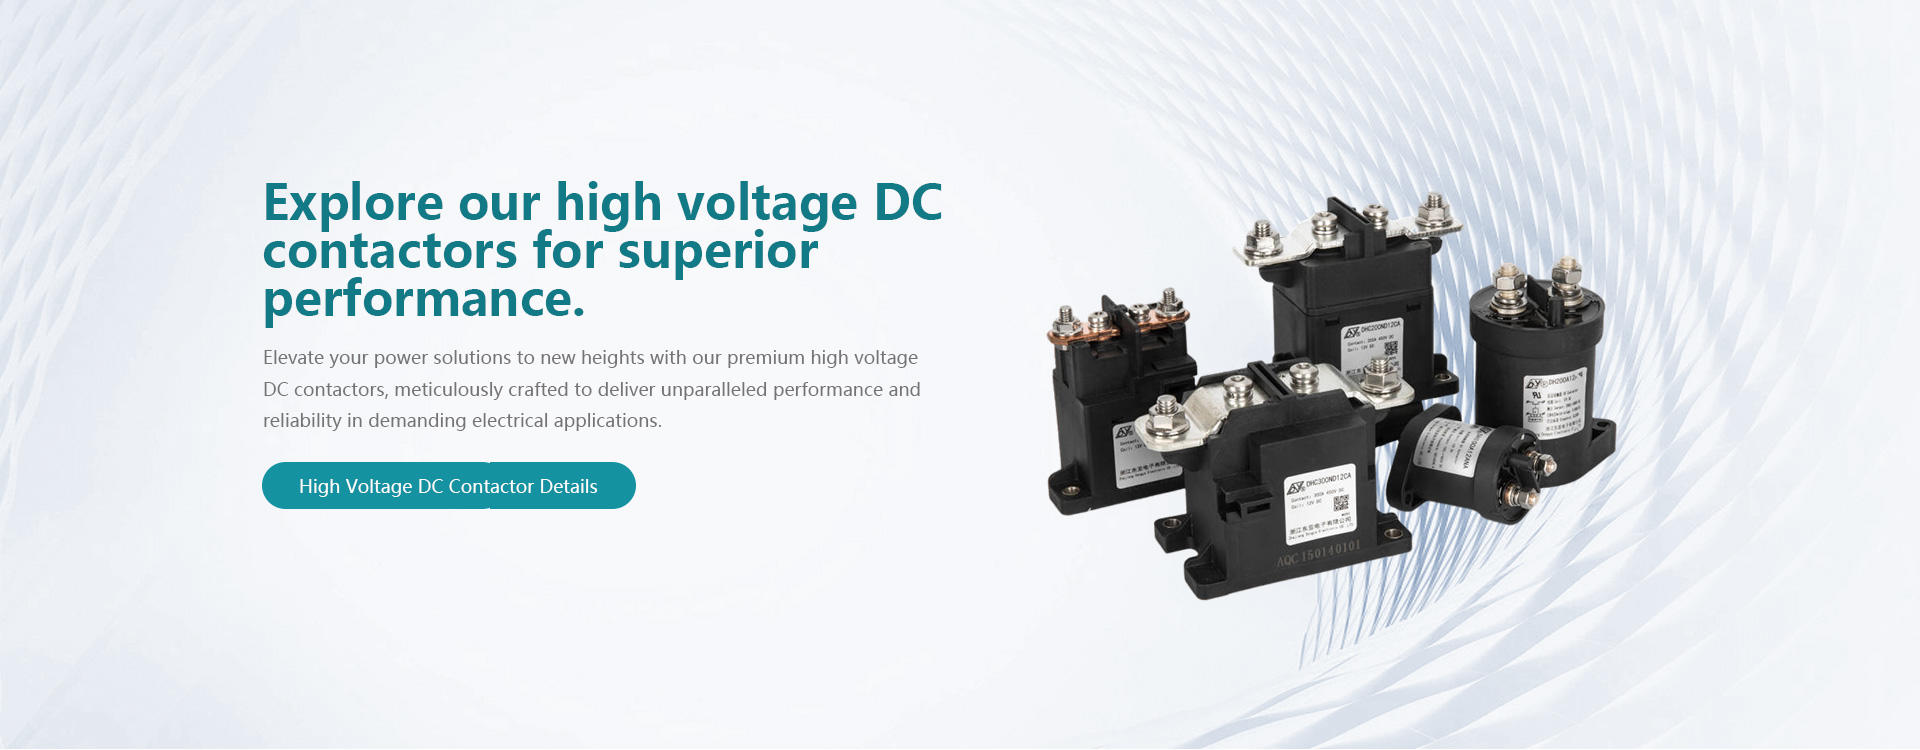 Explore our high voltage DC contactors for superior performance.